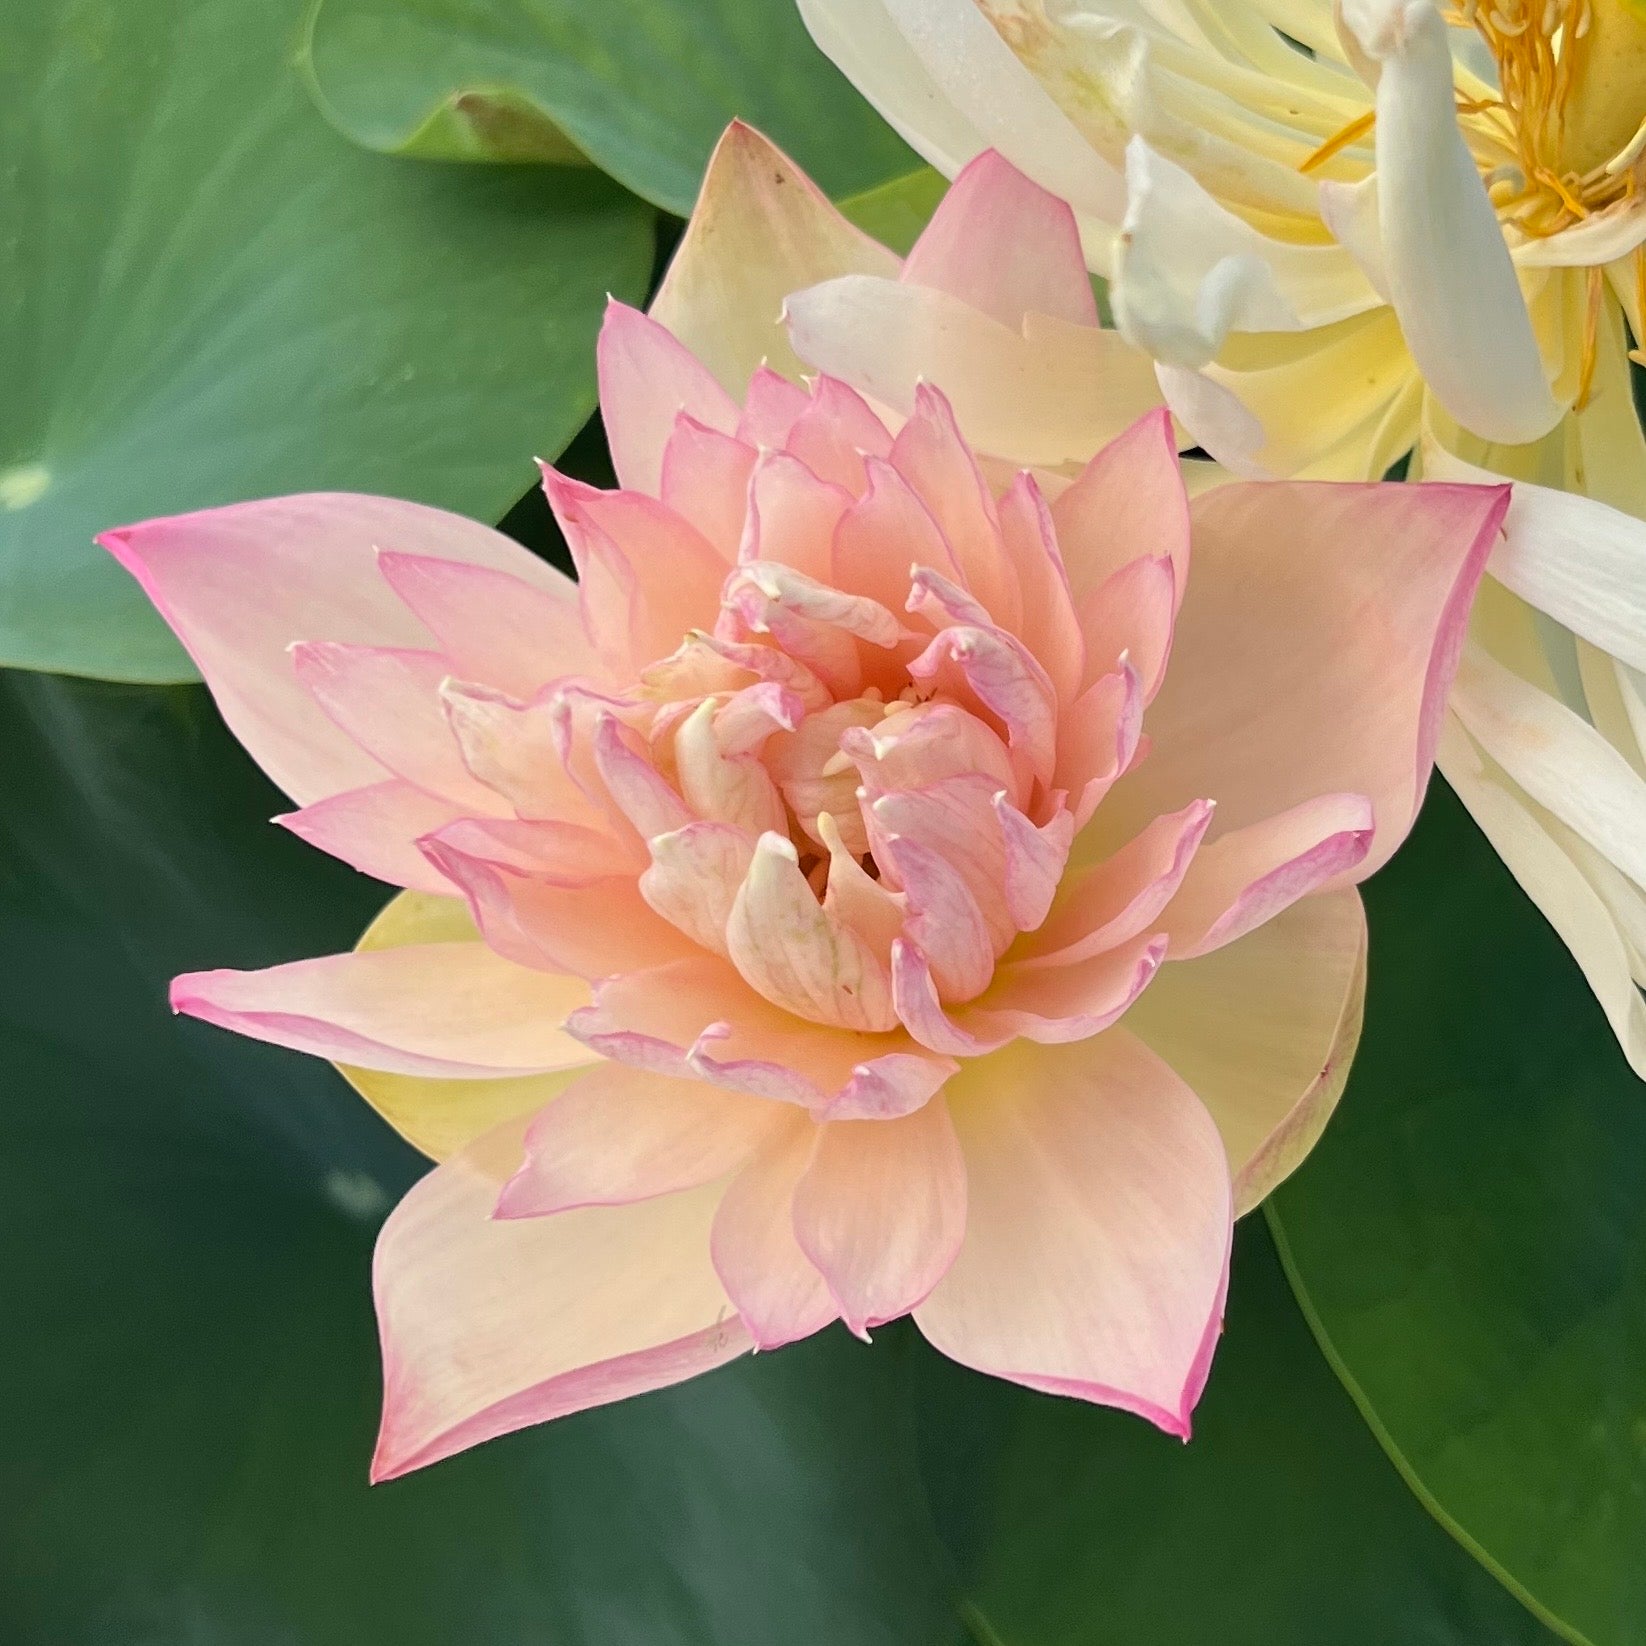 Green Star  Beautiful Lotus Flower Collections – Ten Mile Creek